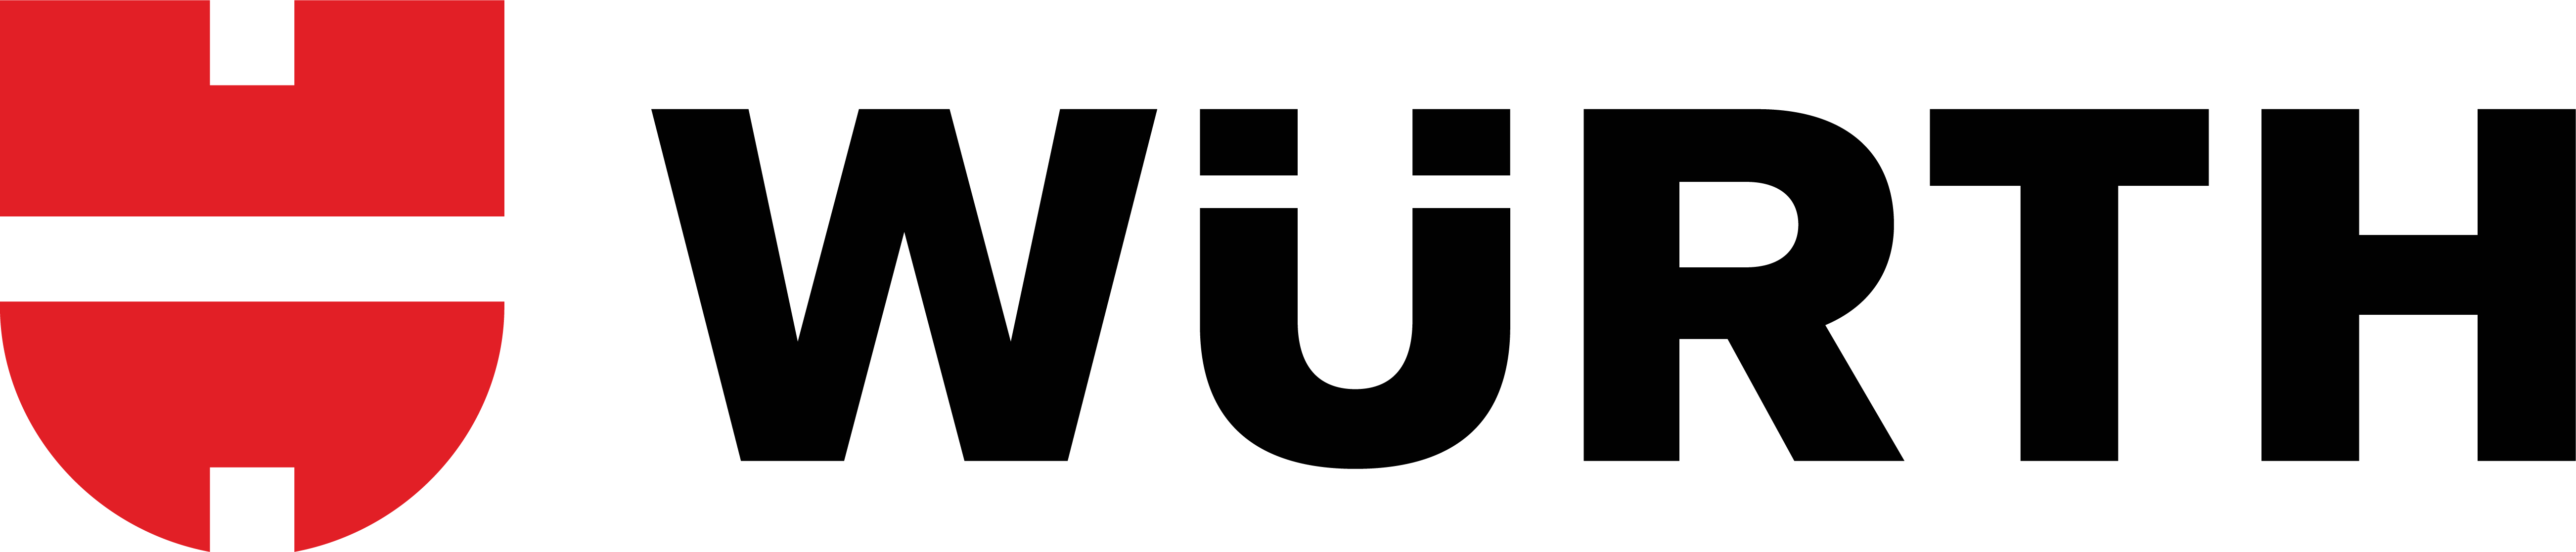 wuerth-logo-1-01